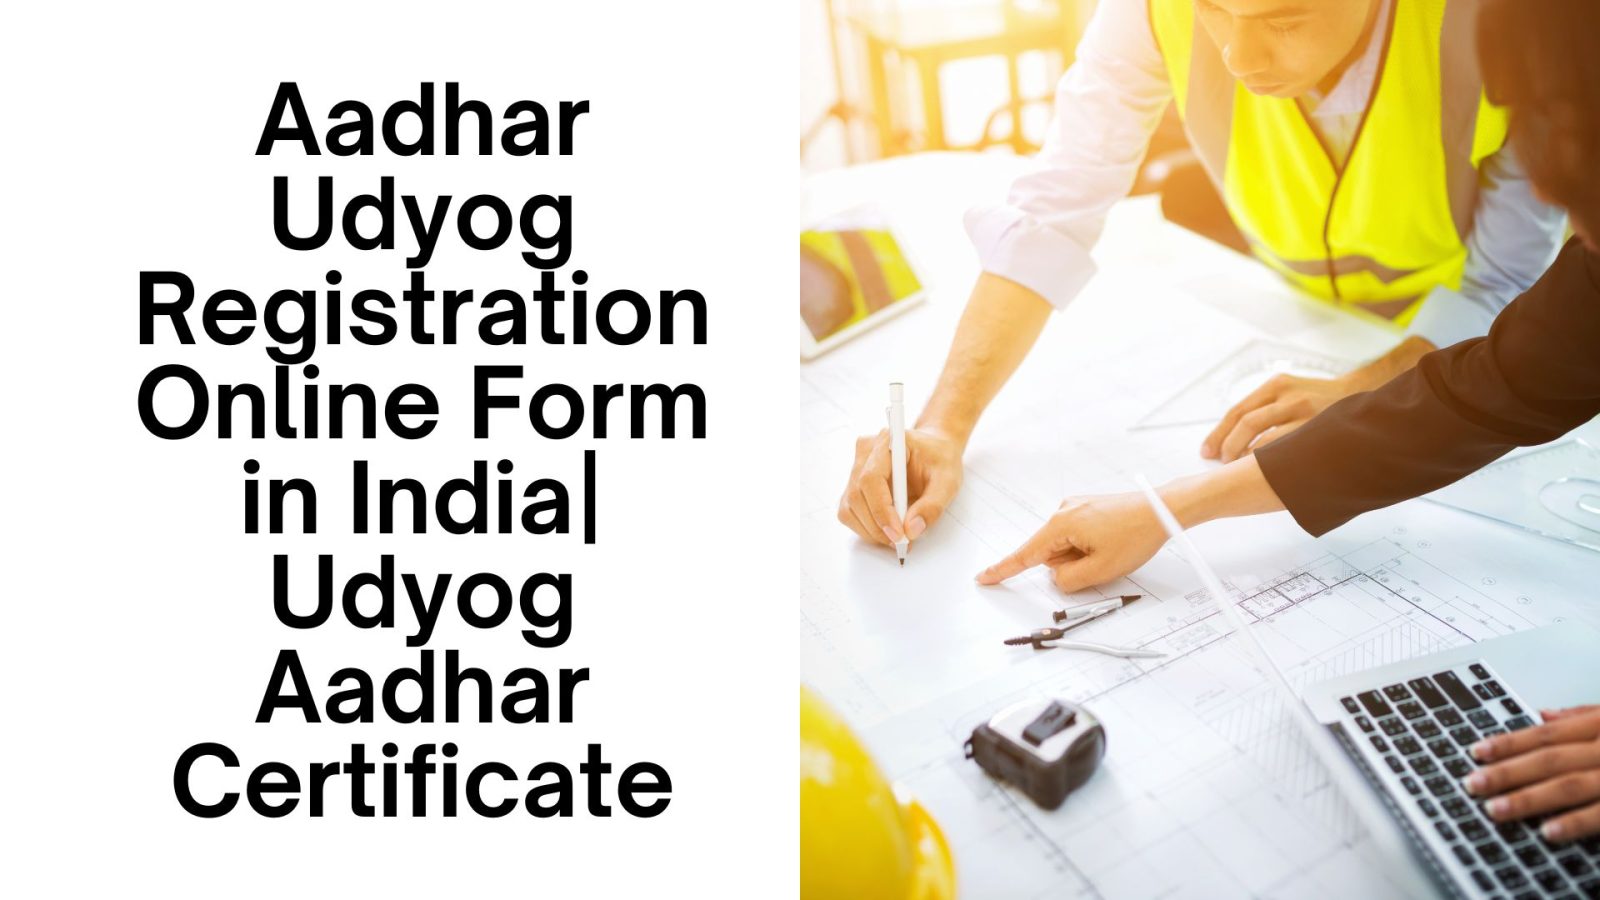 Aadhar Udyog Registration Online Form in India Udyog Aadhar Certificate